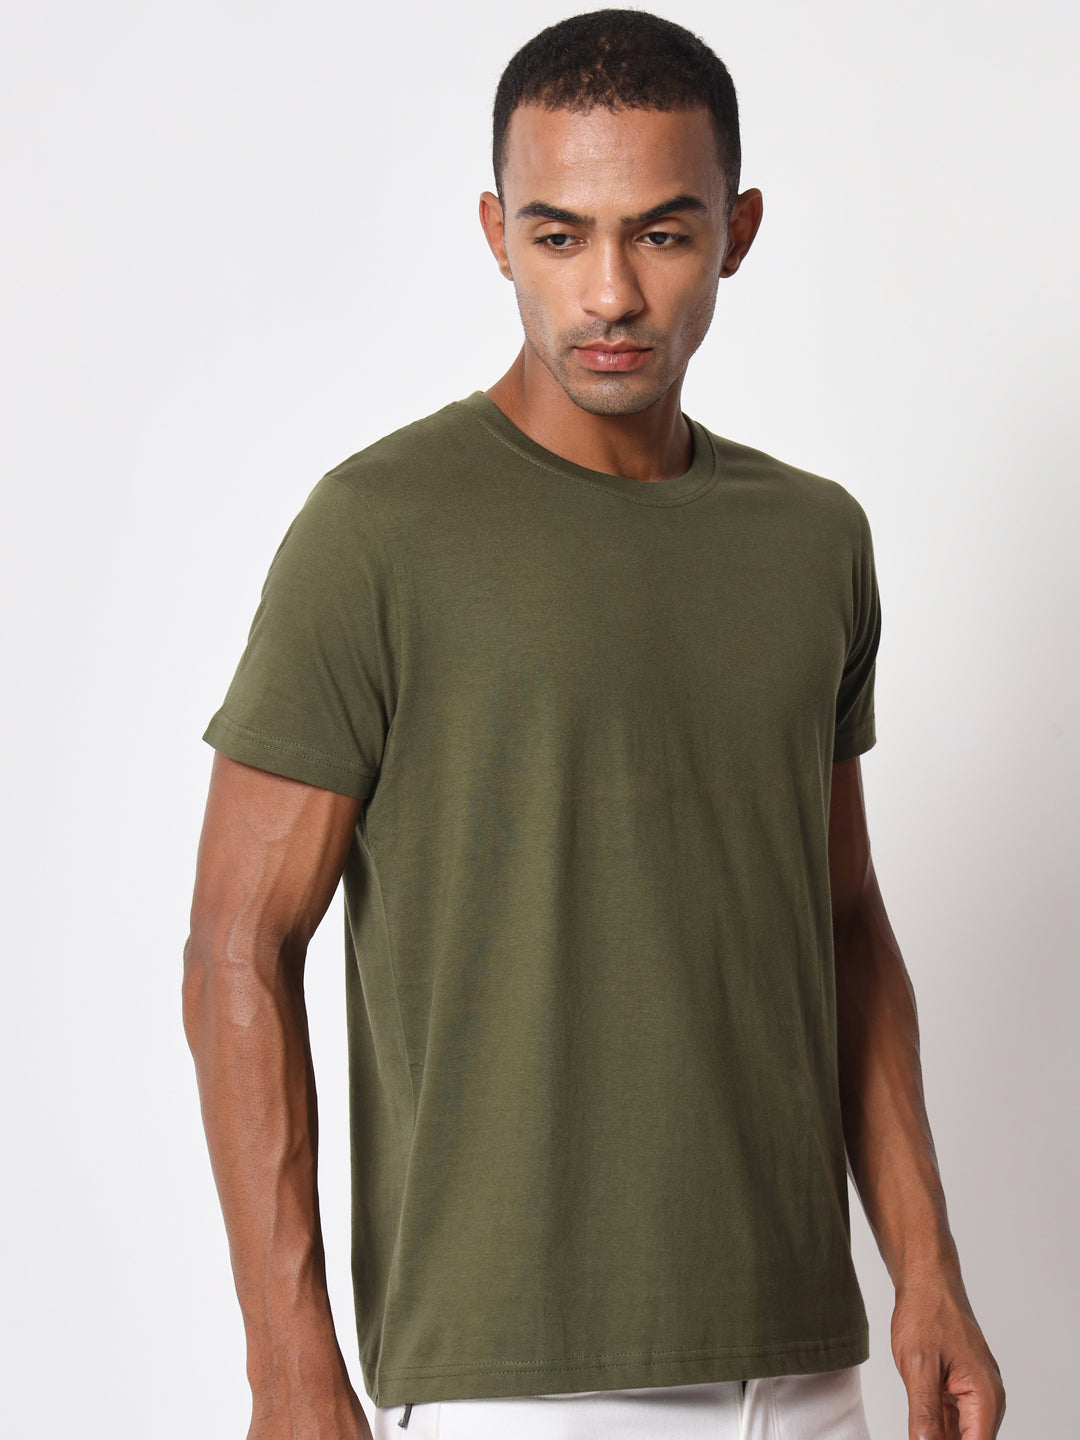 Olive Green Half Sleeve Cotton T-shirt for Men